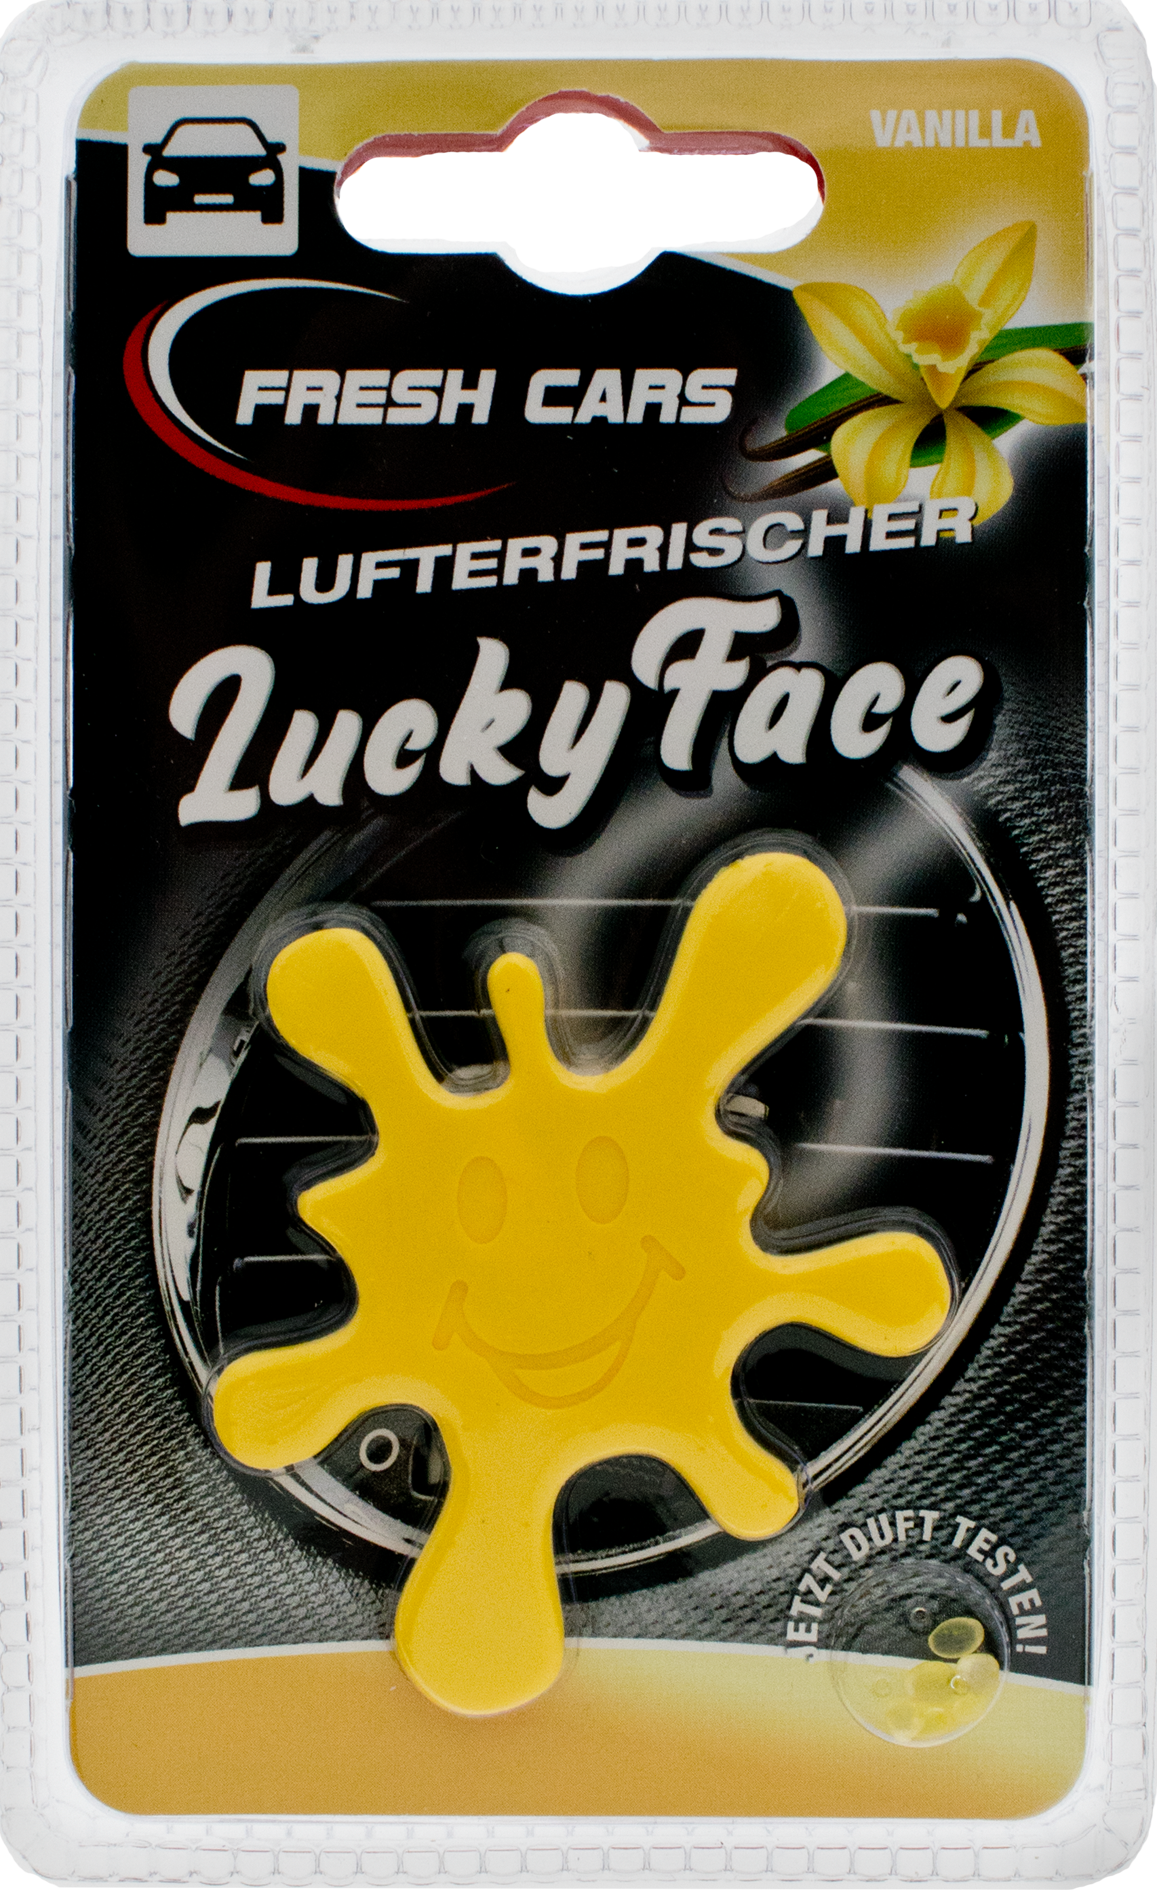 Picture of Lufterfrischer LUCKY FACE Vanilla